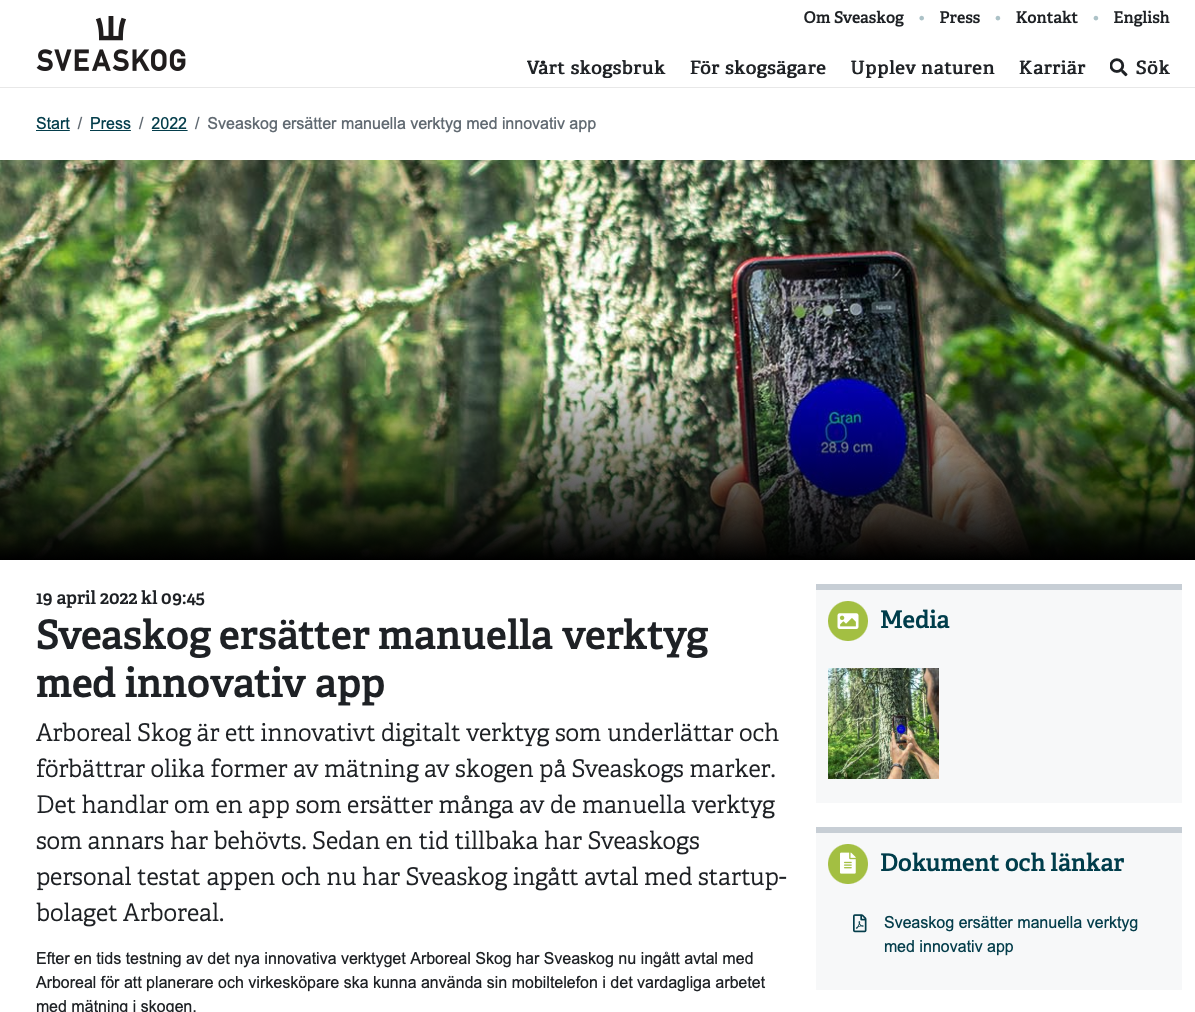 Sveaskog ersätter sina manuella verktyg med Arboreal Skog